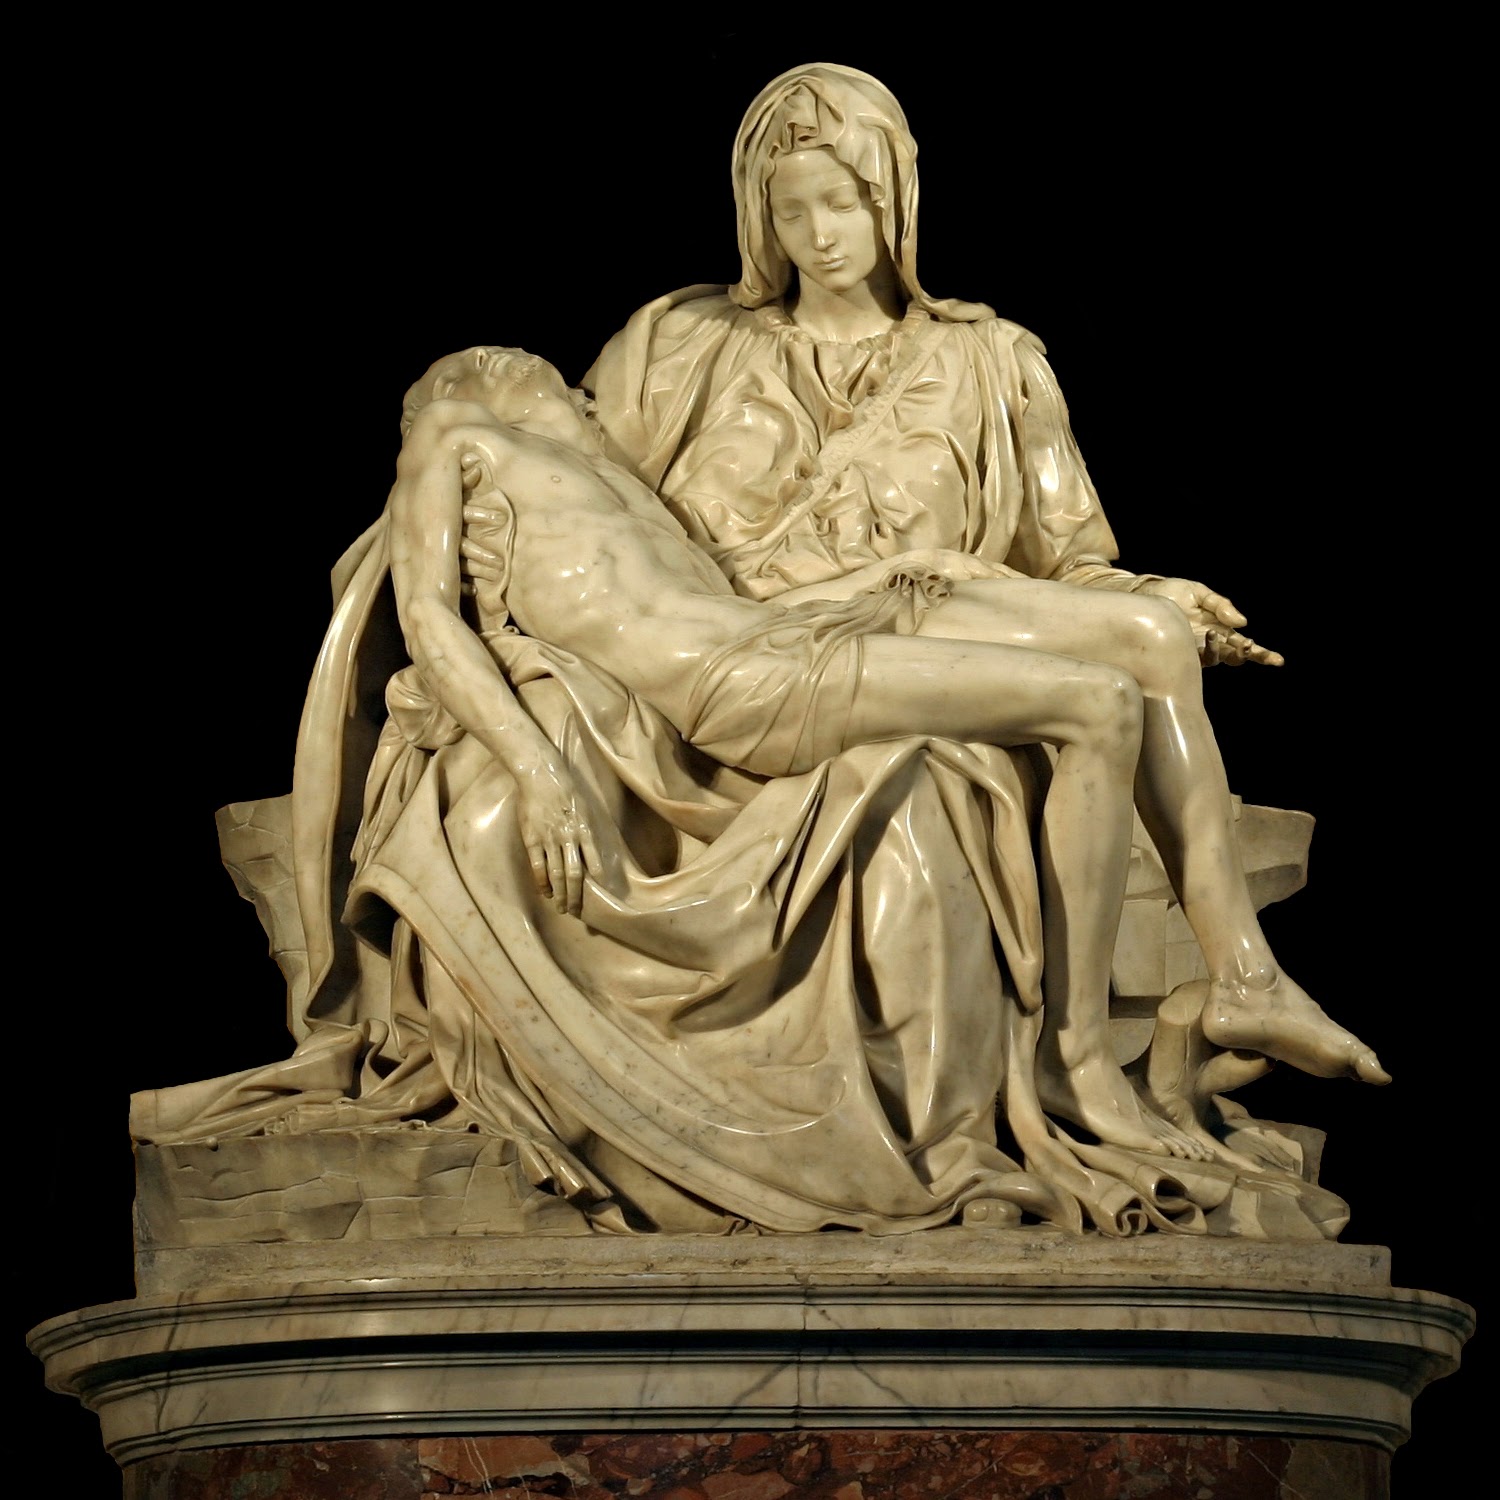 Michelangelo, the art history